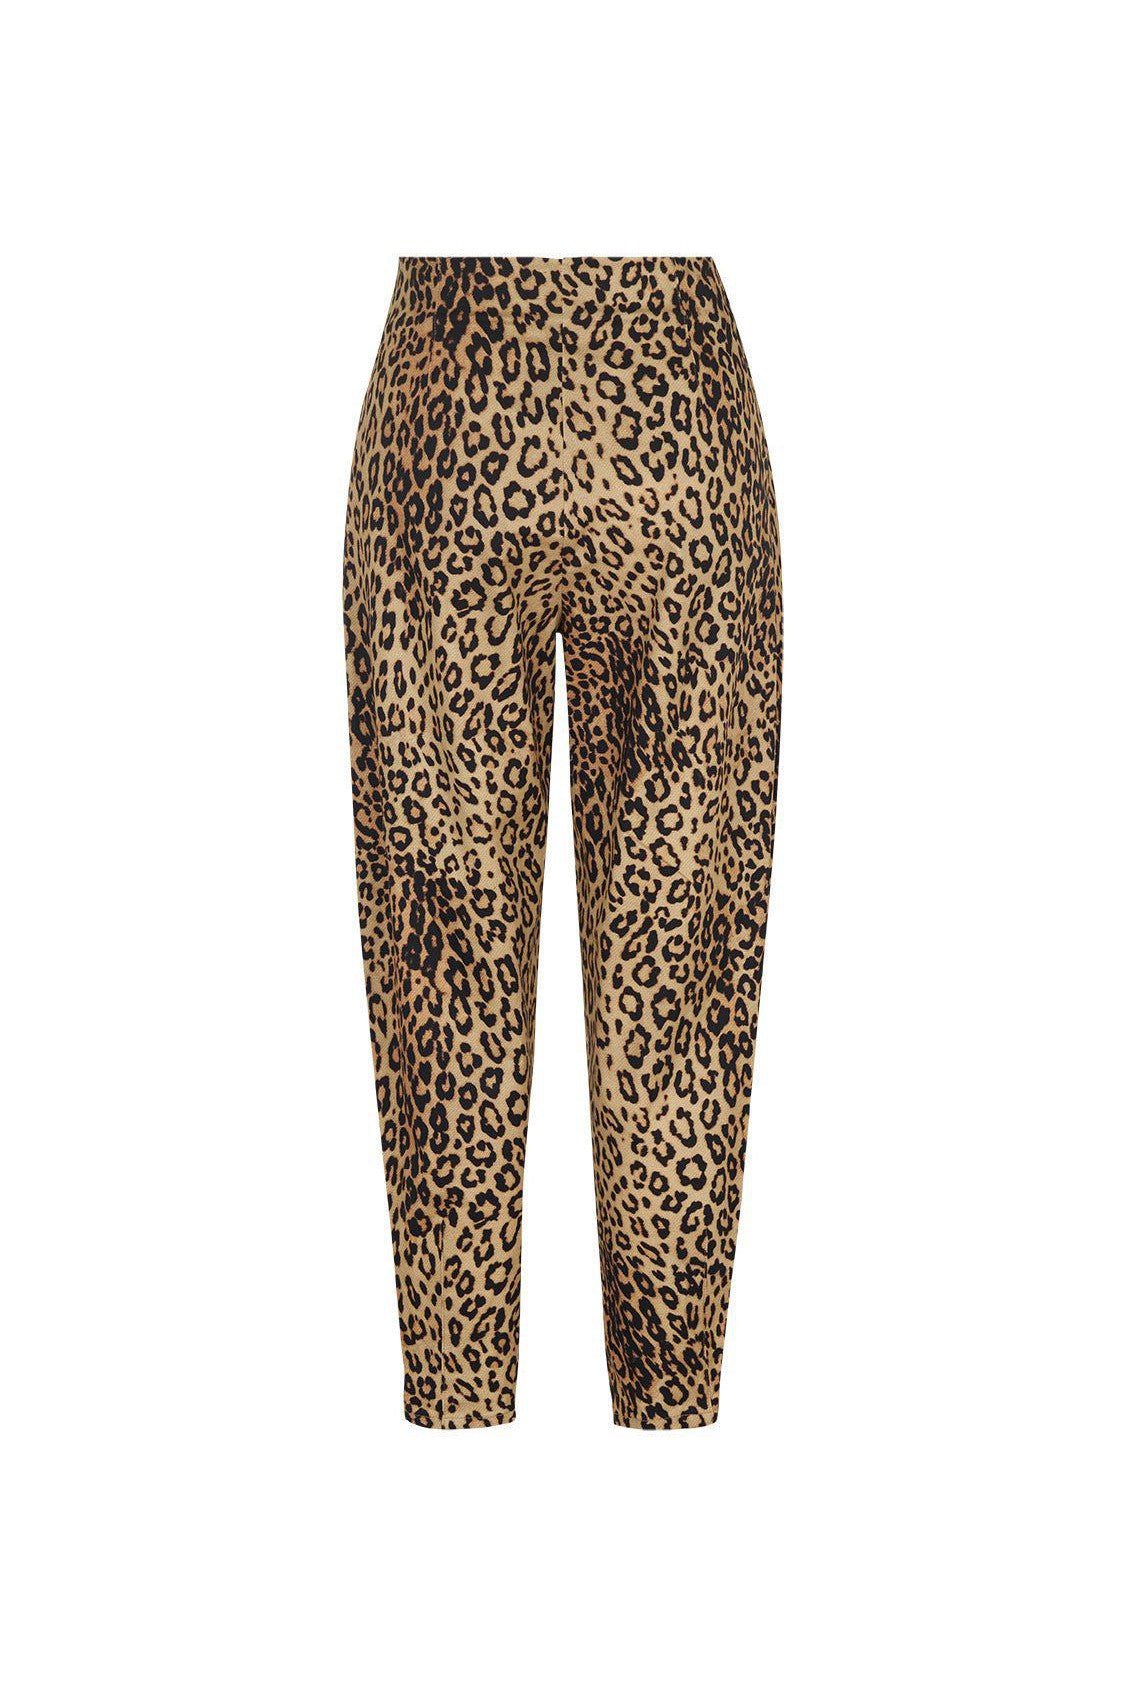 Leopard Print Slouchy Pants - Mack & Harvie